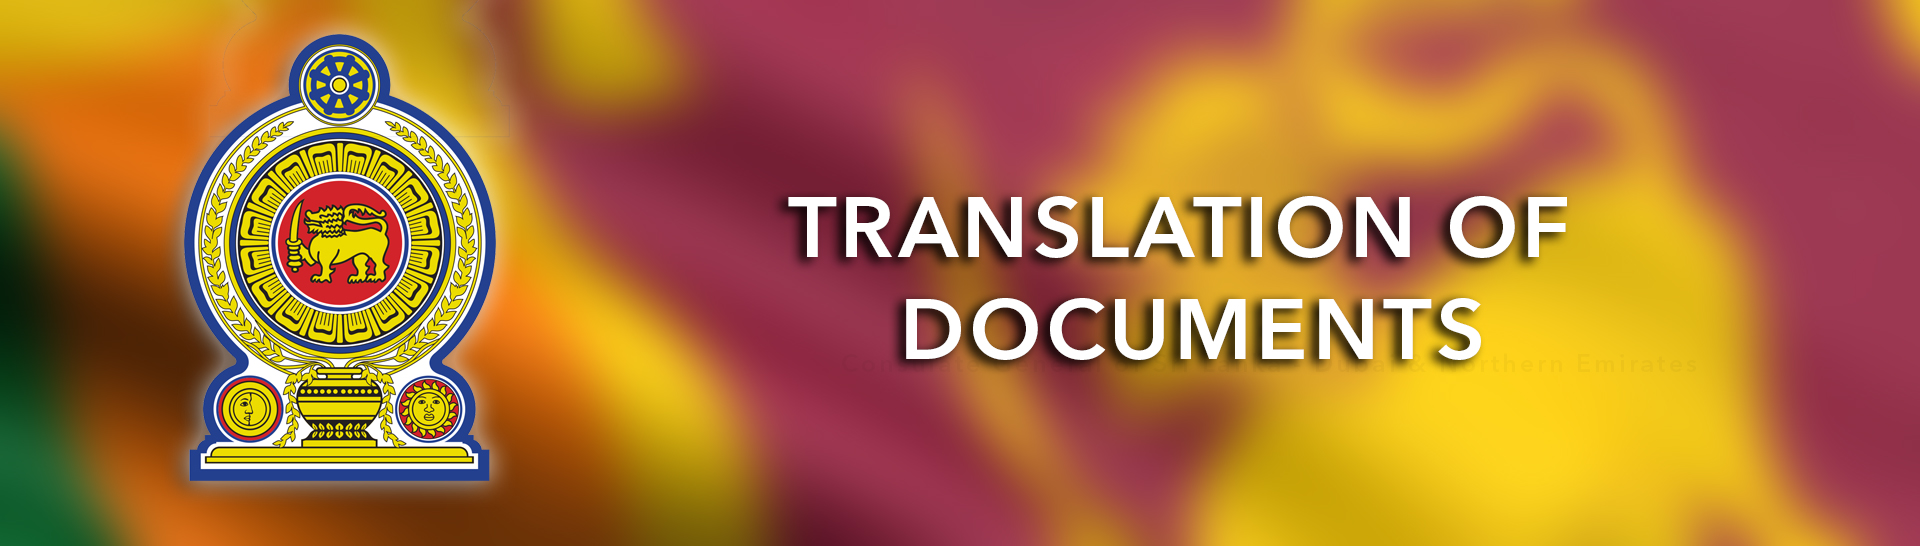 Translation of Documents